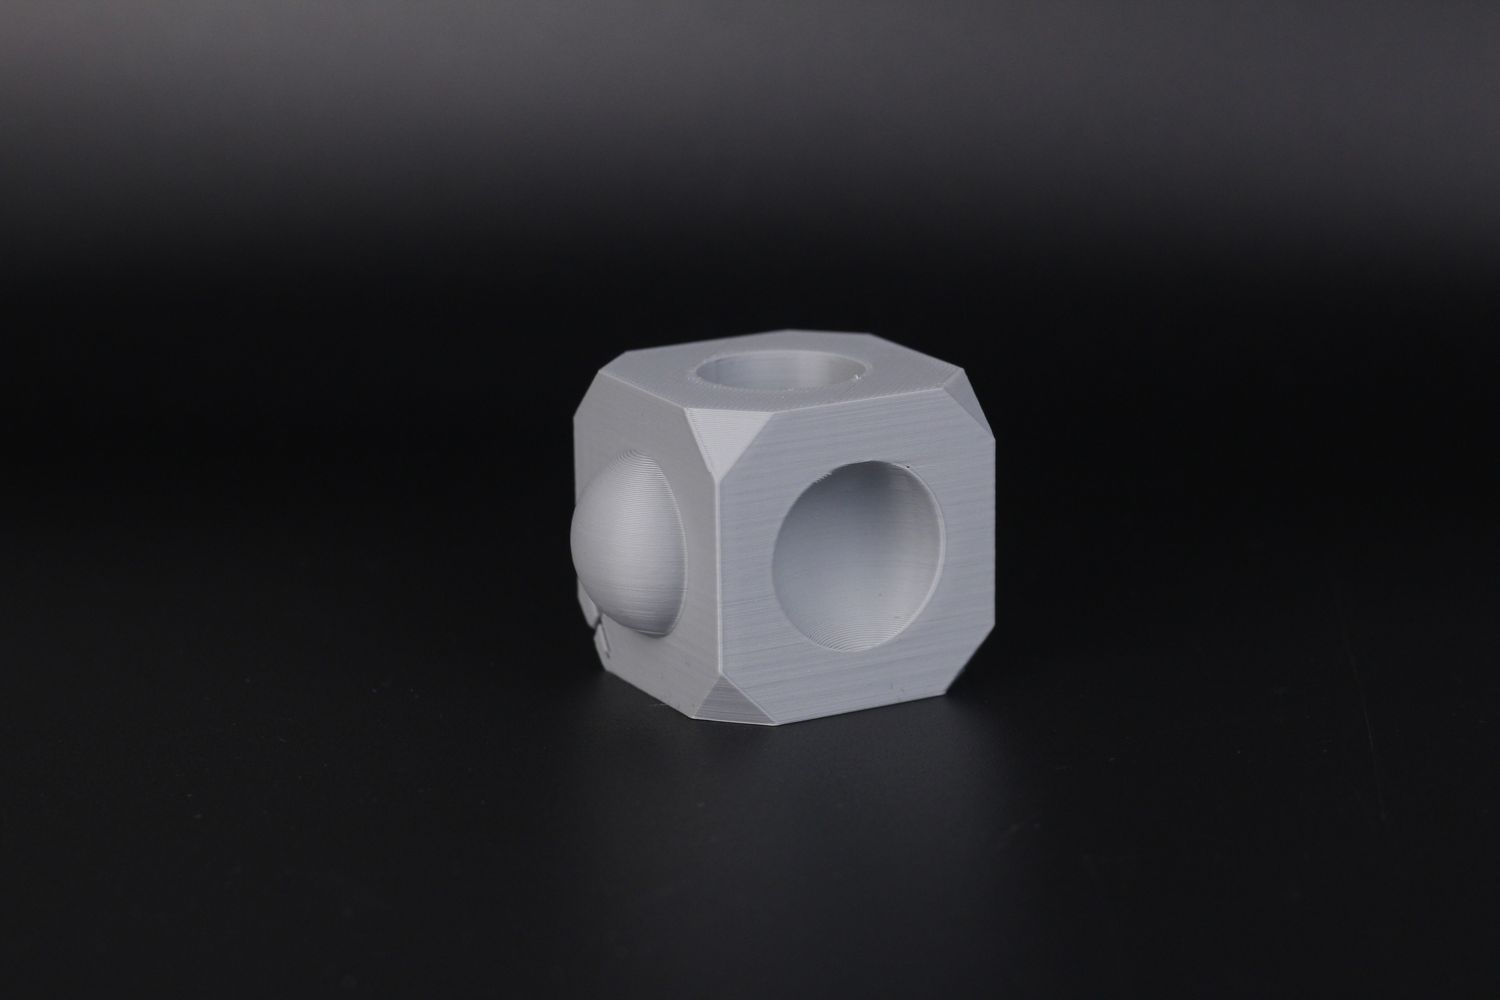 40mm Zaribo Calibration Cube Bambu Lab X1 Review3 | Bambu Lab X1 Review: Just as Good